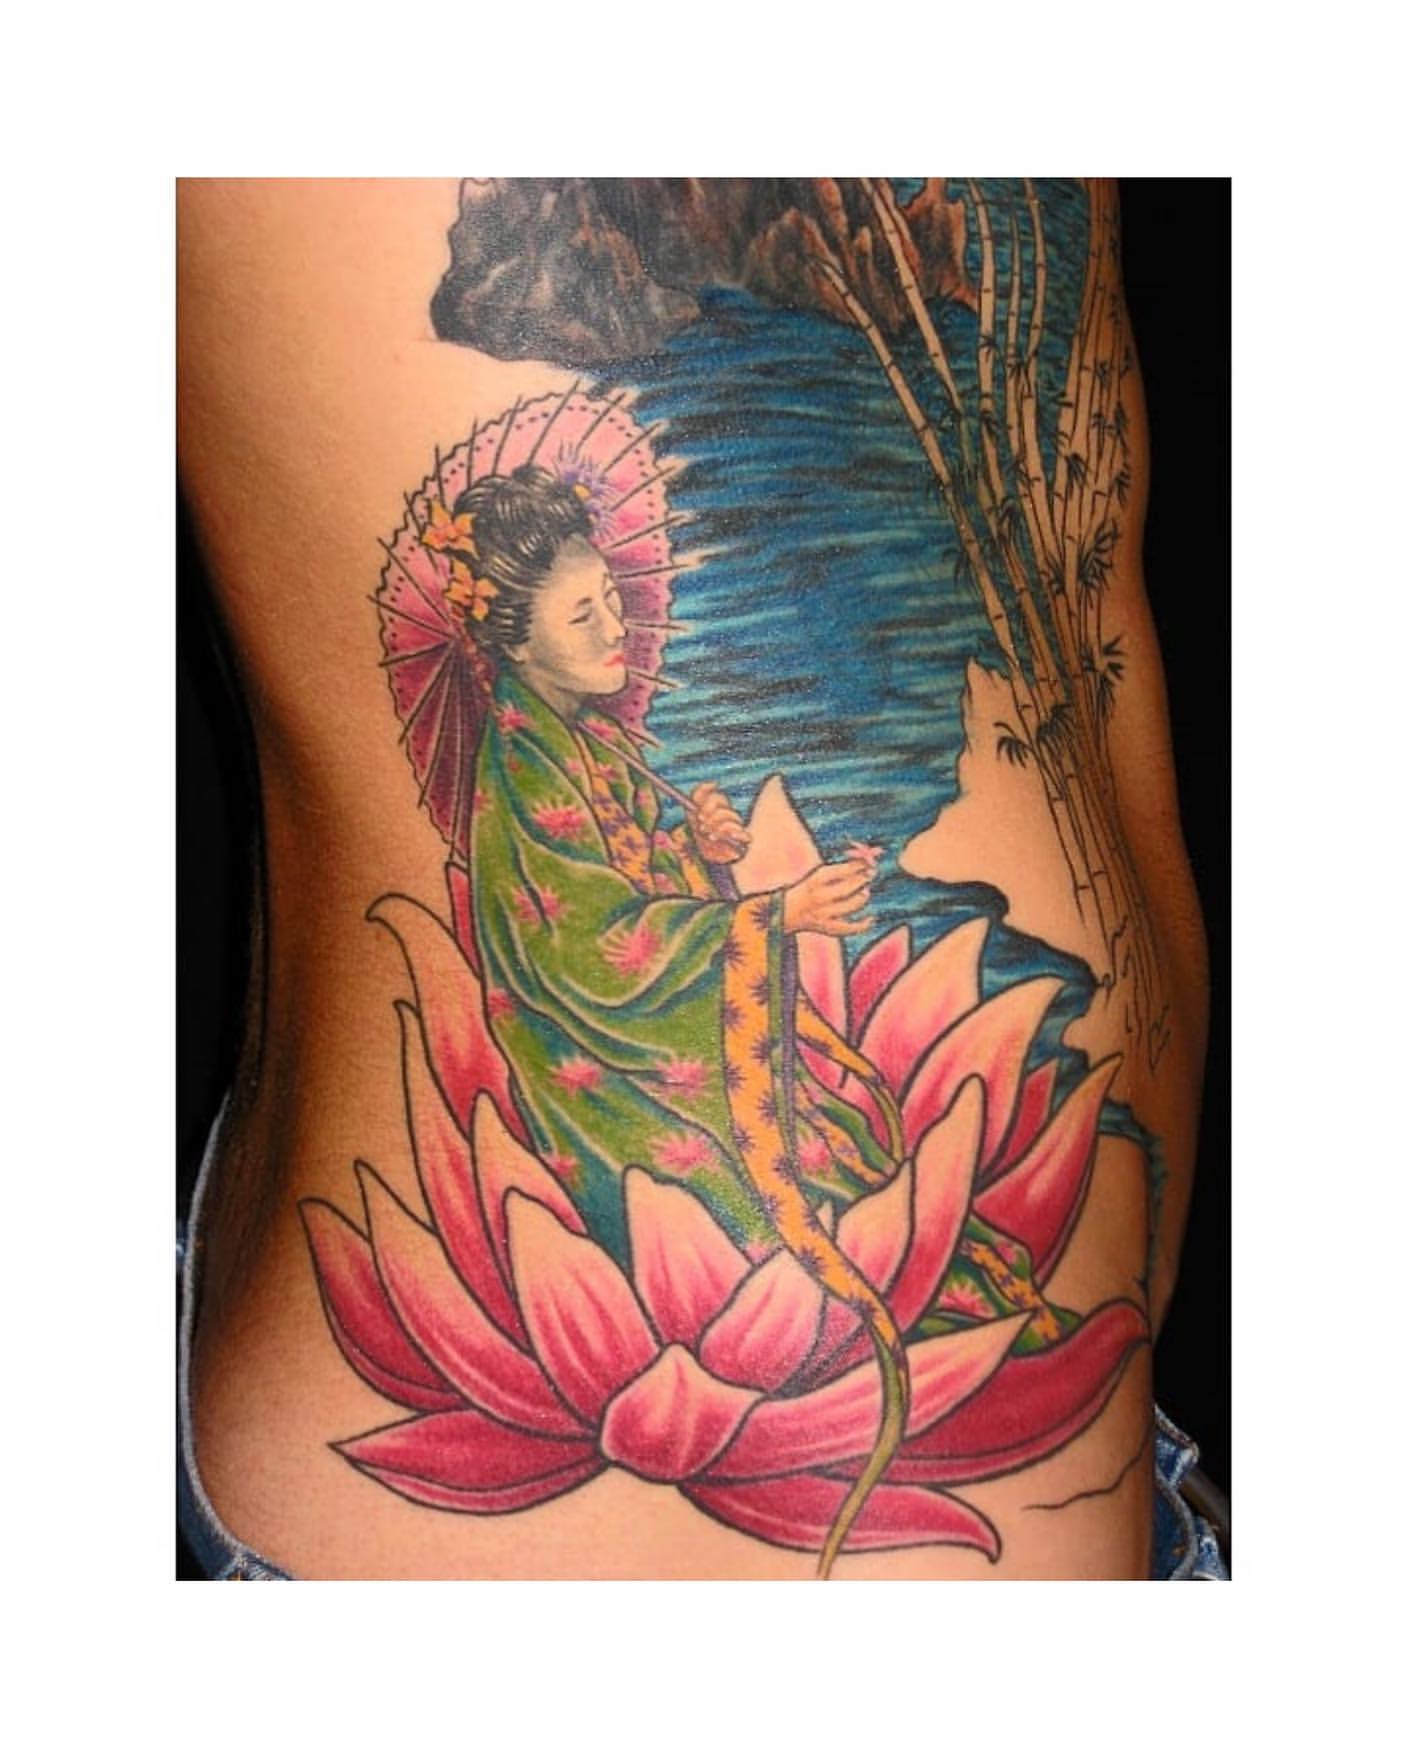 Flower Tattoo Ideas, Lotus Flower Tattoo